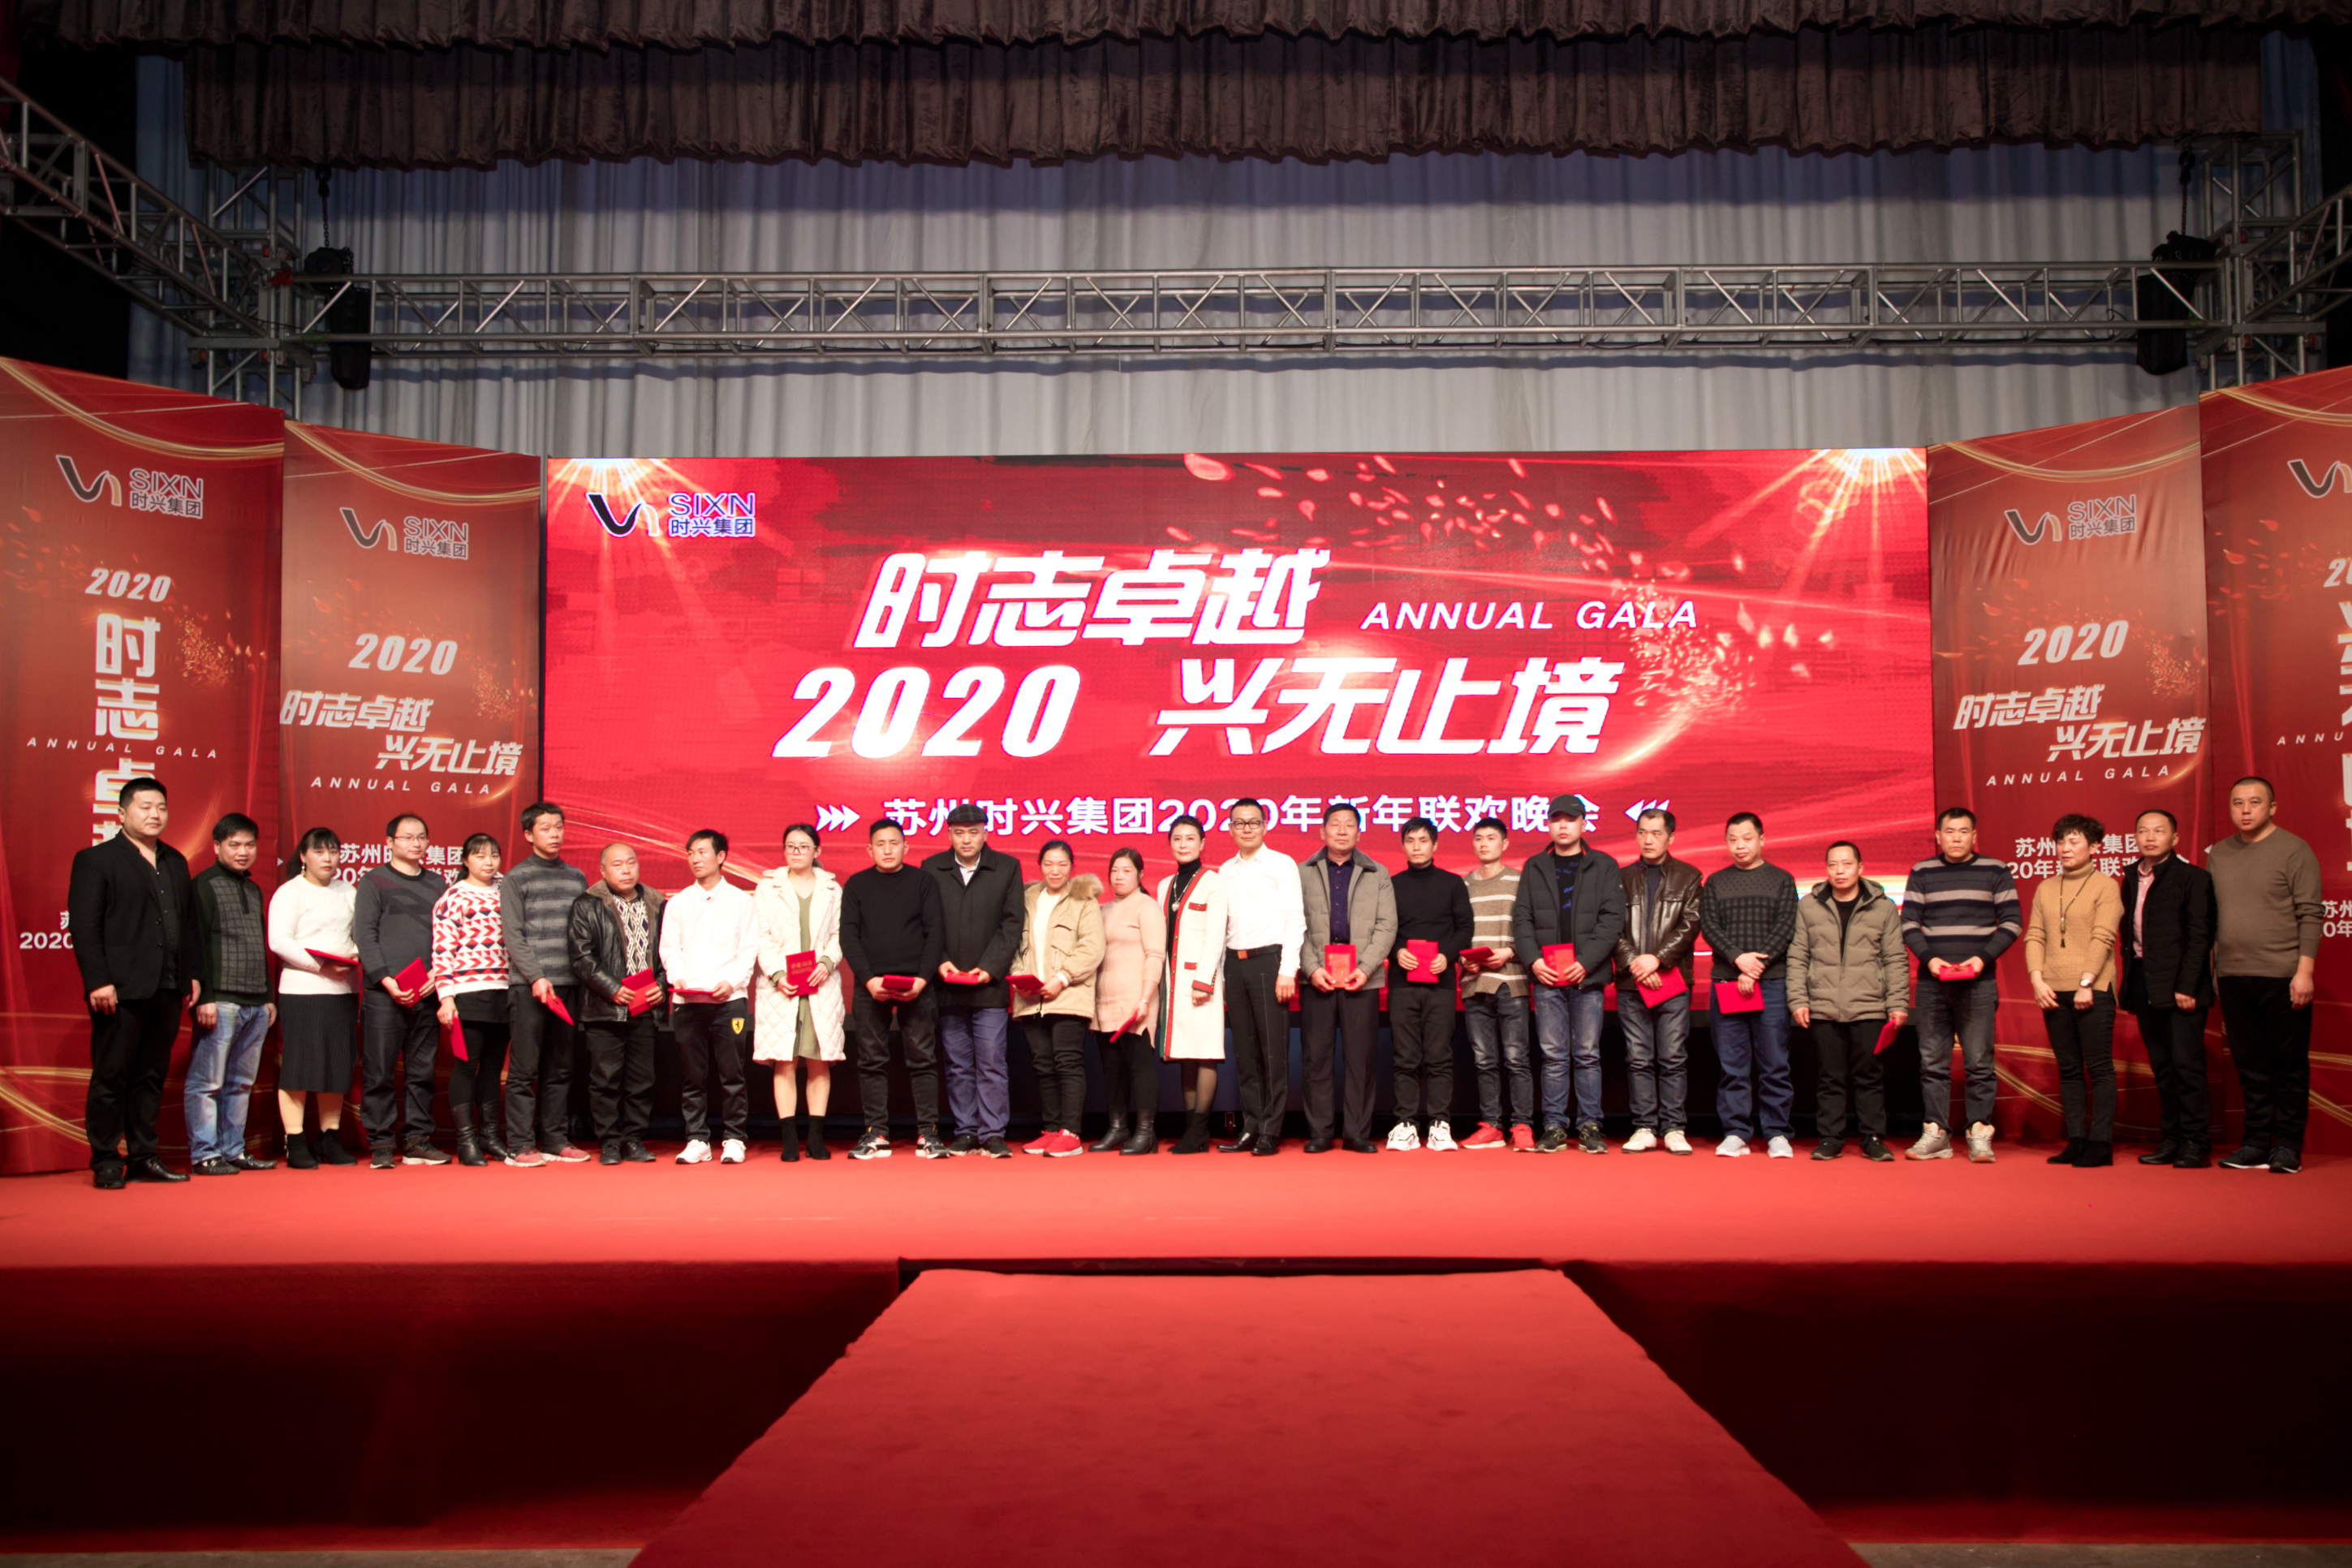  2020 Spring Festival Annual Meeting